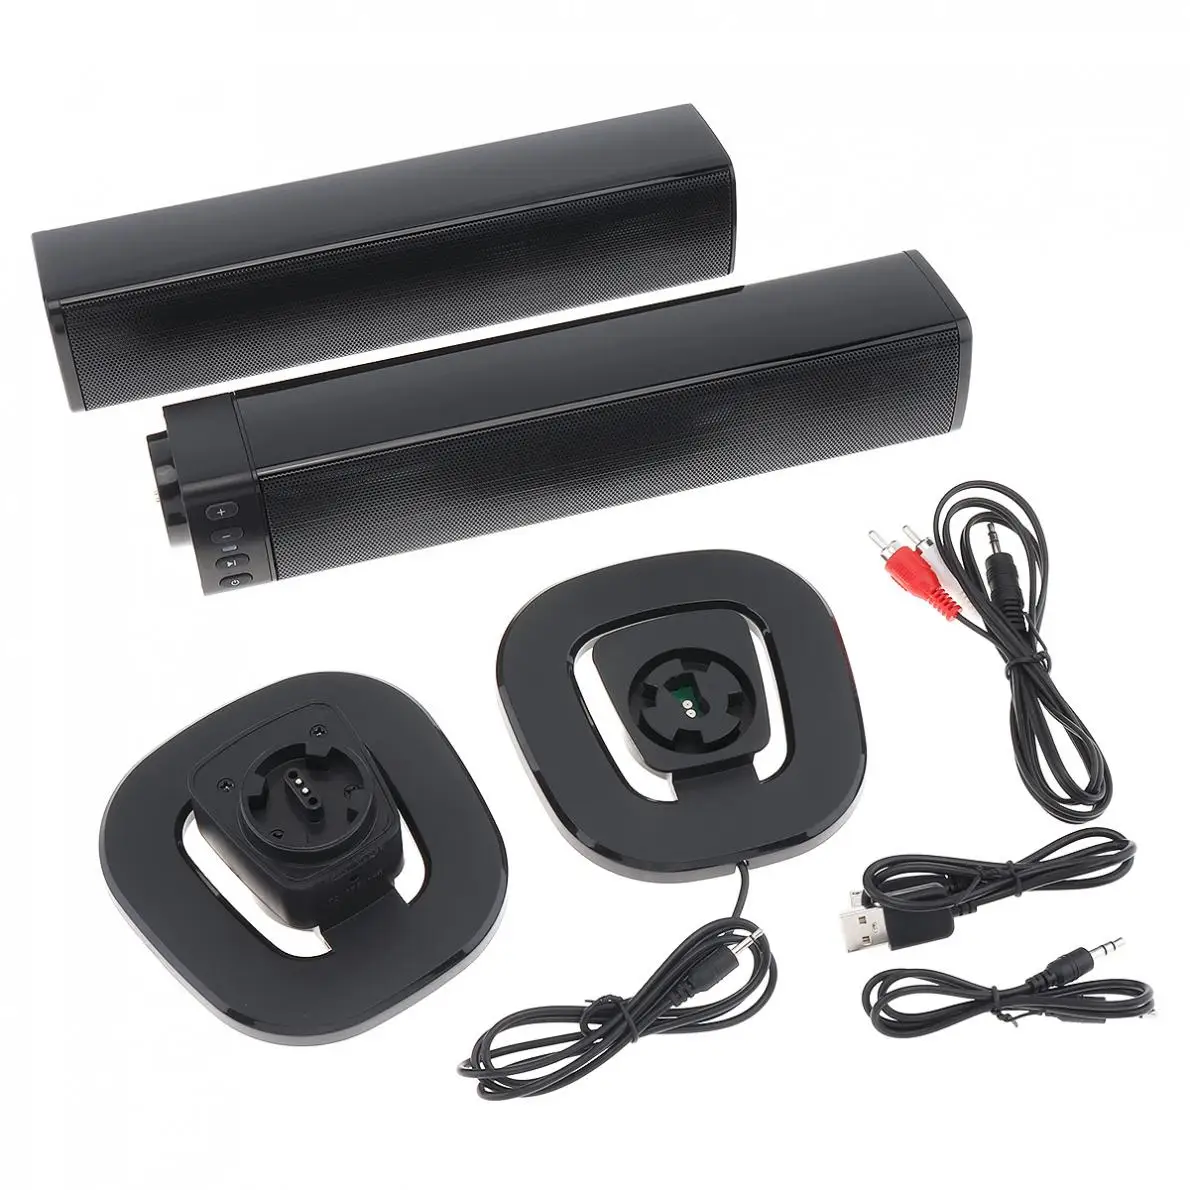 BS-36 Home Theater Sensurround Multi-function Soundbar Speaker with 4 Full Range Horns Support Foldable and Split enlarge